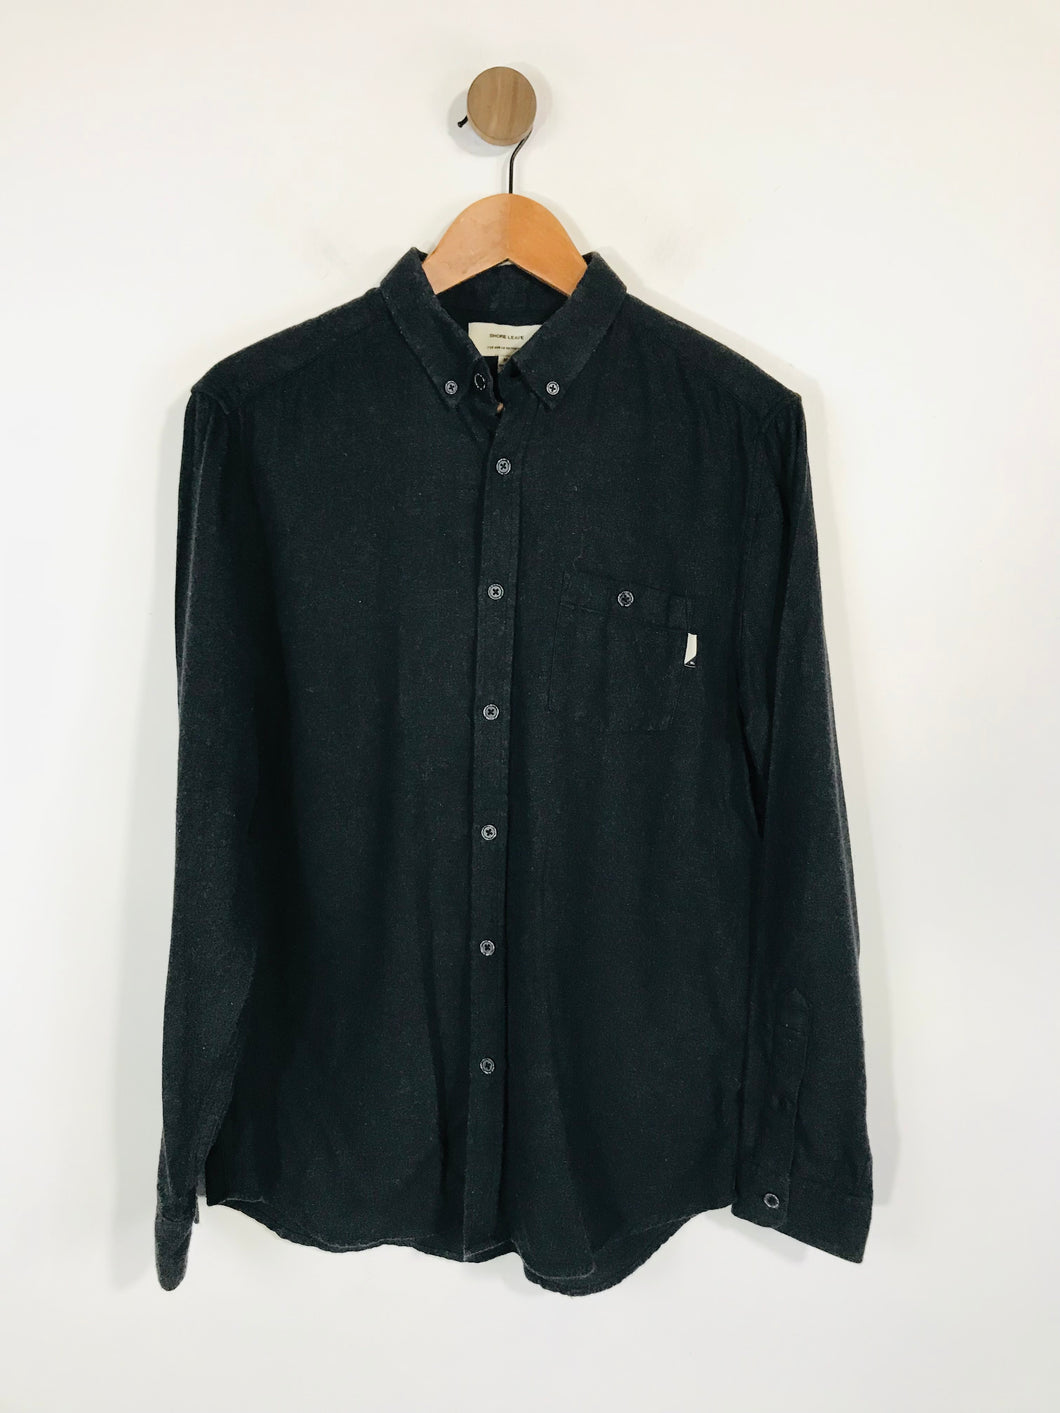 Urban Outfitters Men's Cotton Shore Leave Button-Up Shirt | M | Grey